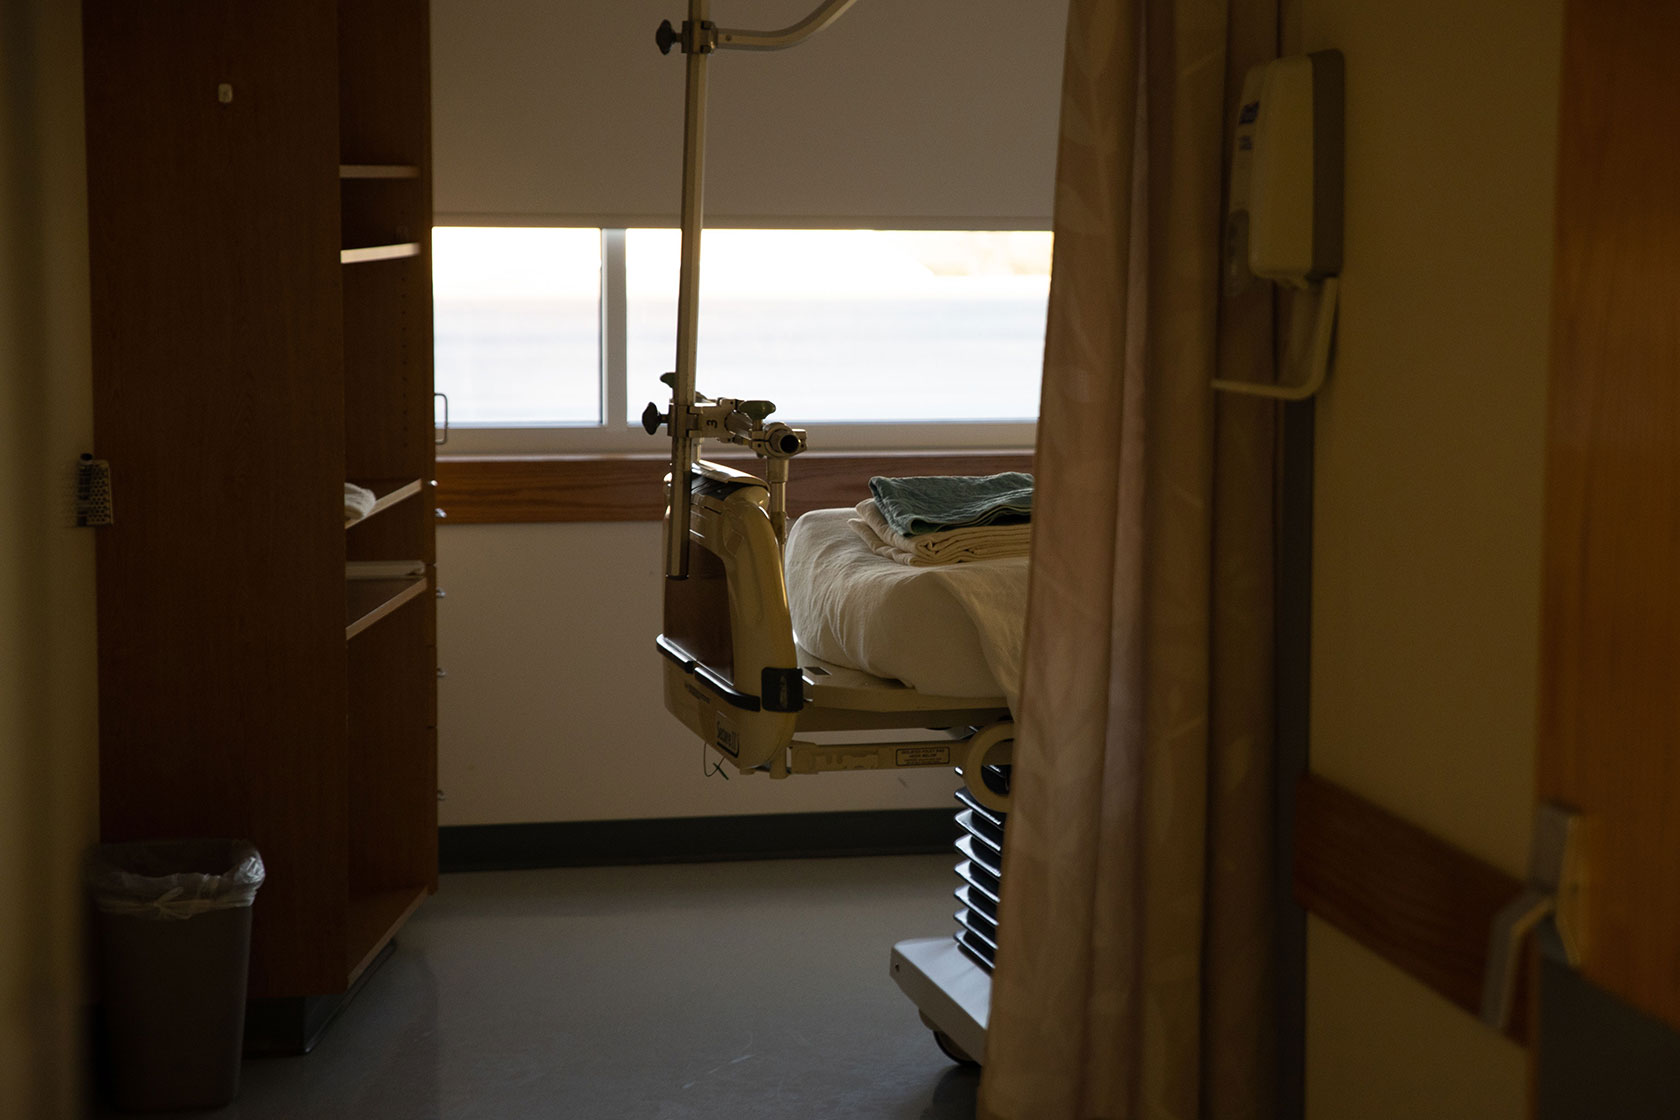 End of a hospital bed seen through a door